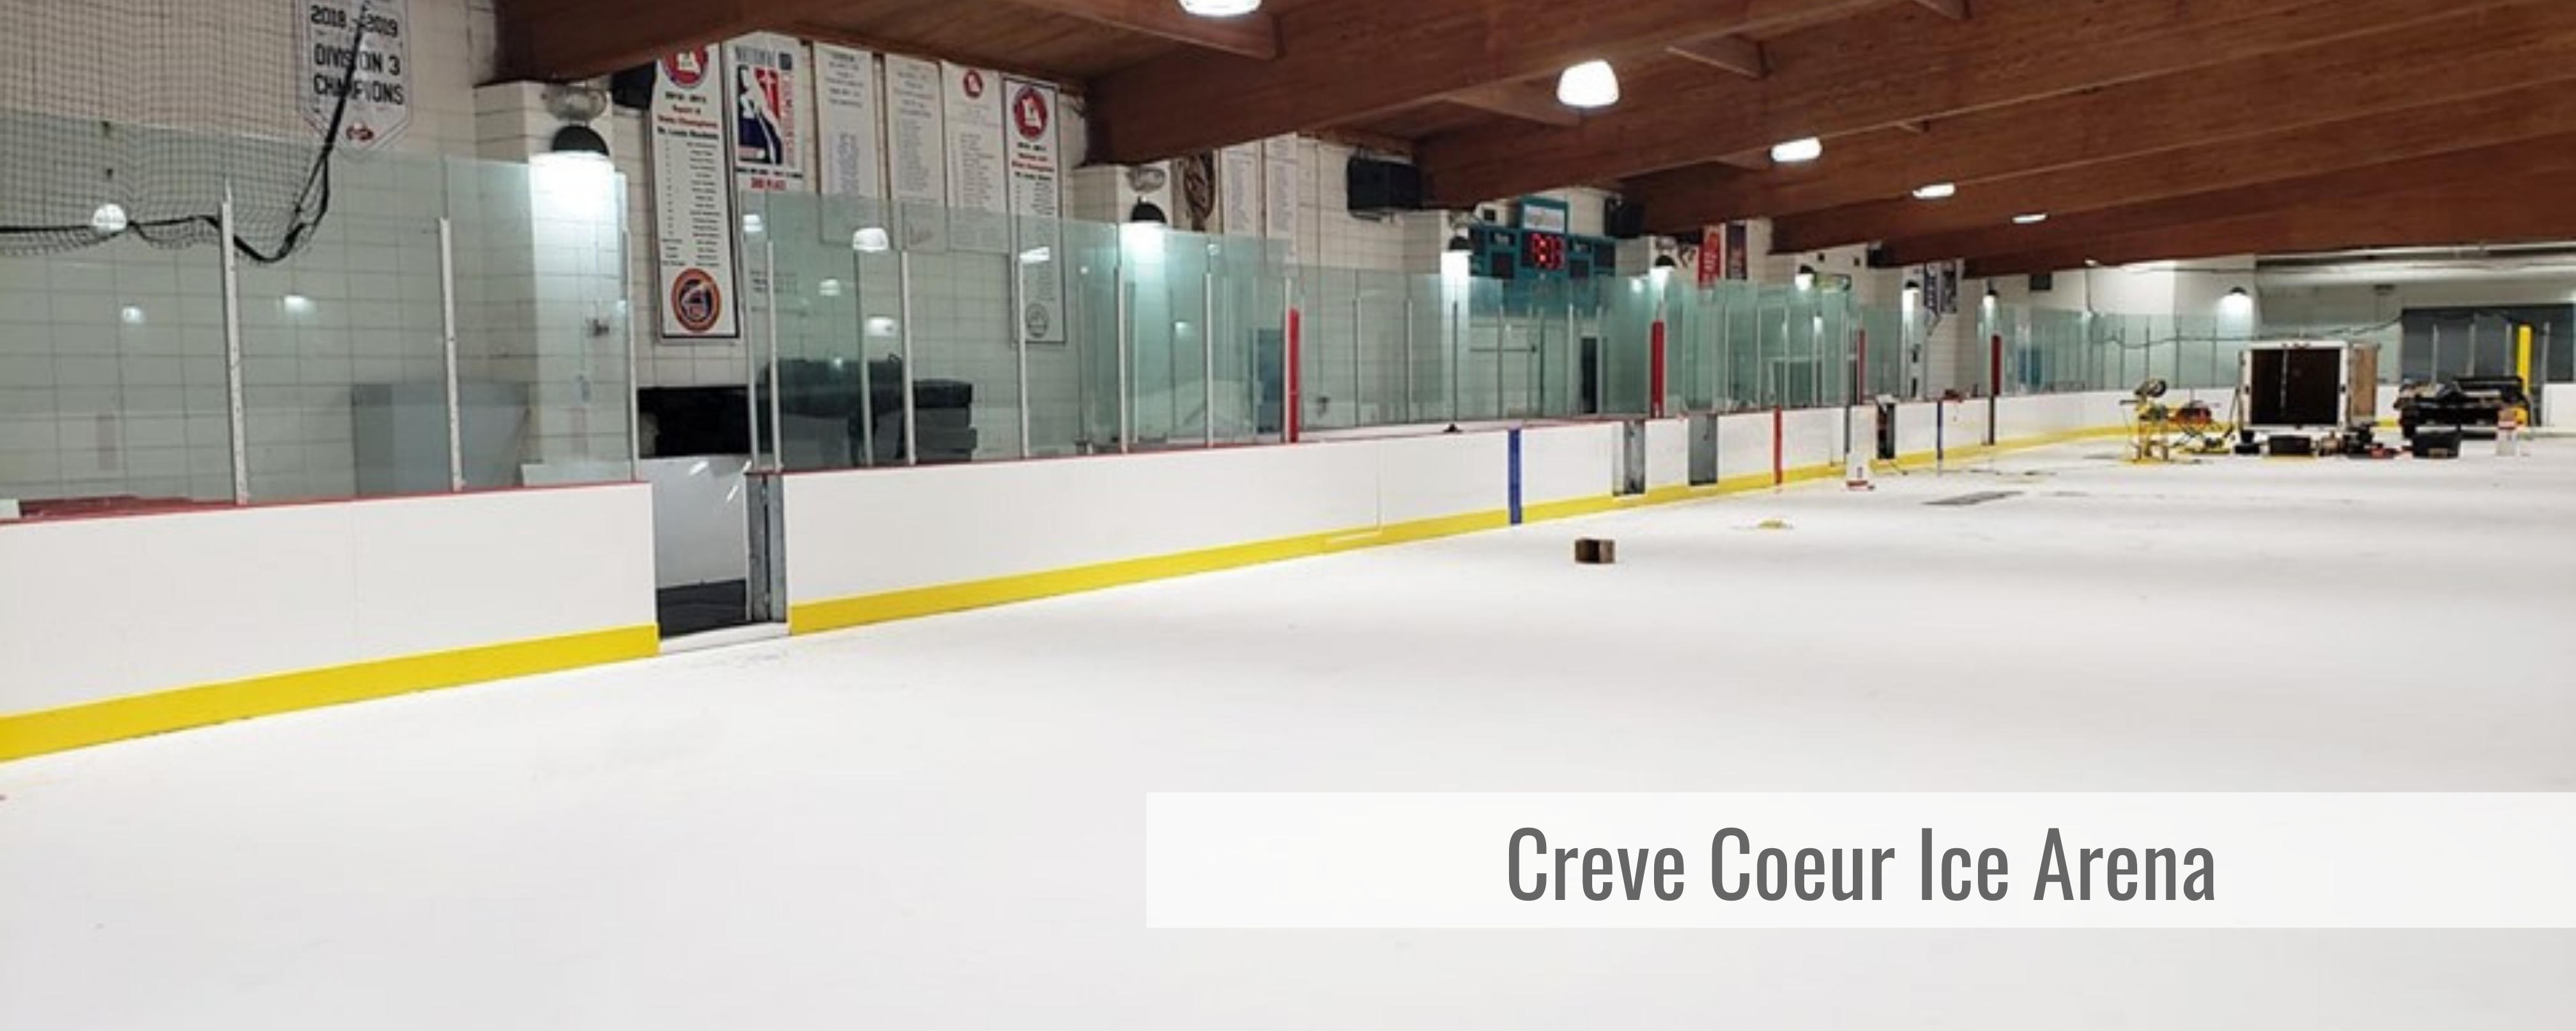 Creve Coeur Ice Arena